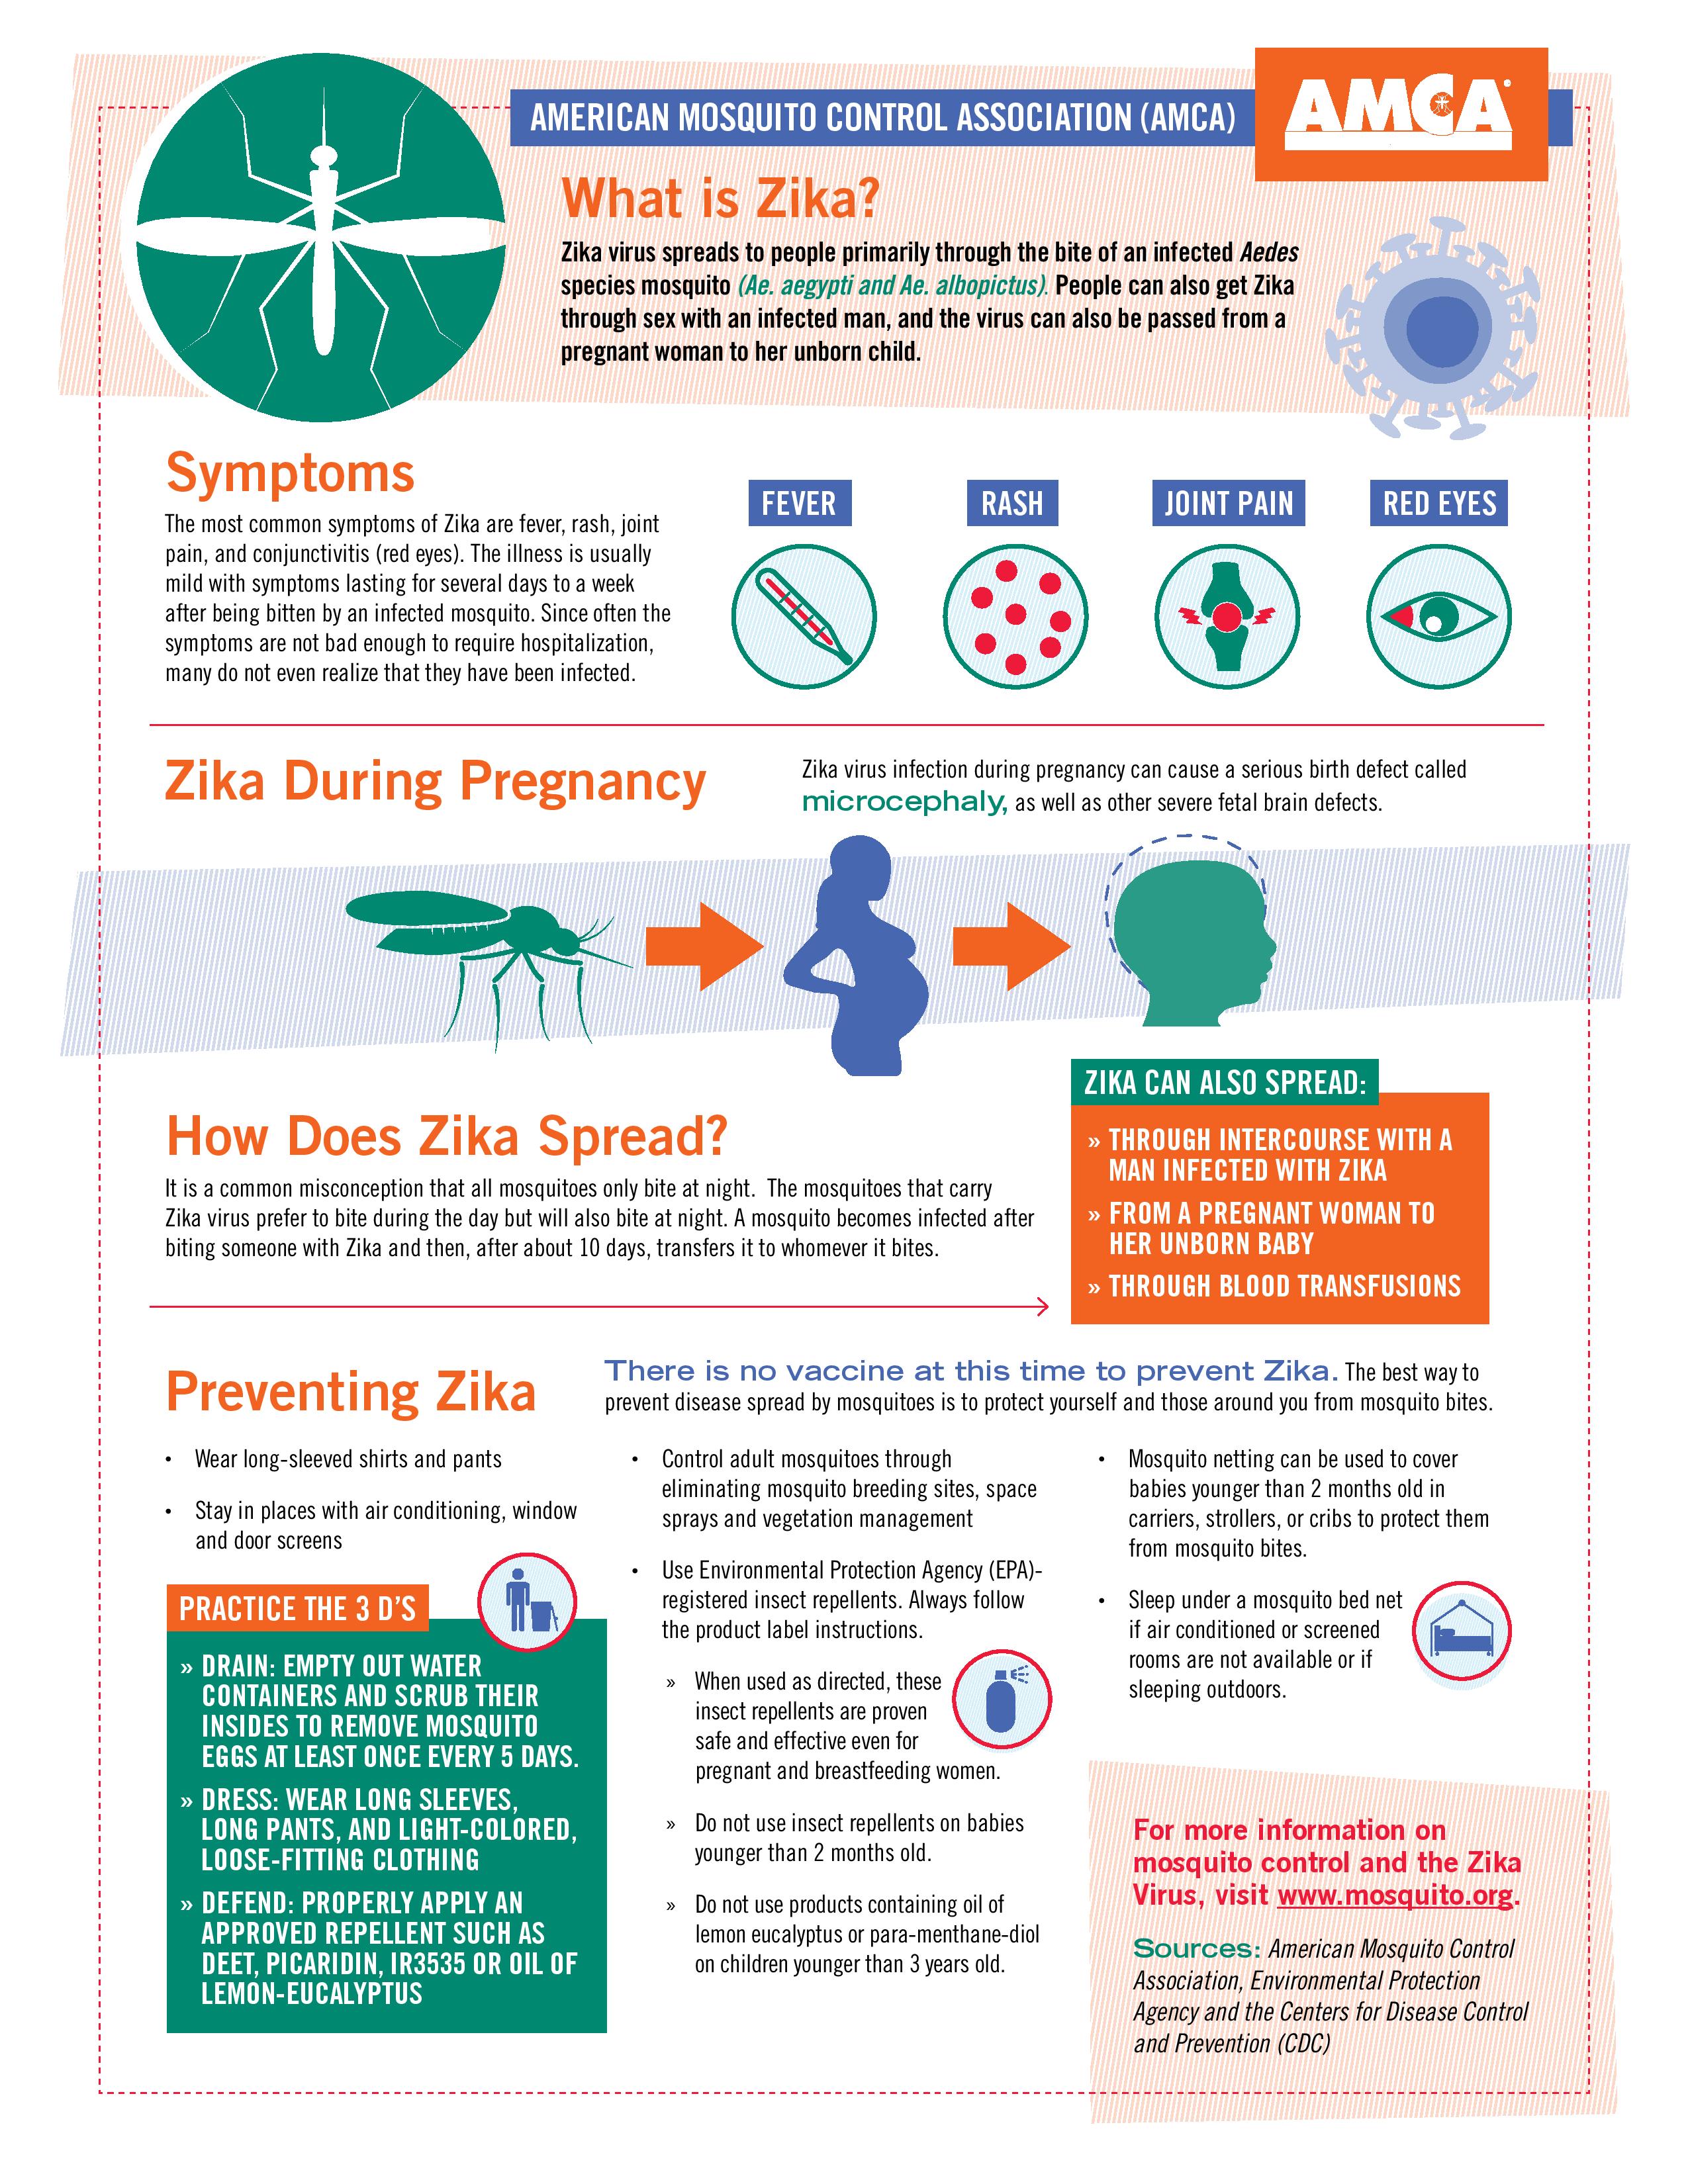 AMCA Release New Zika Fact Sheet - Featured Image